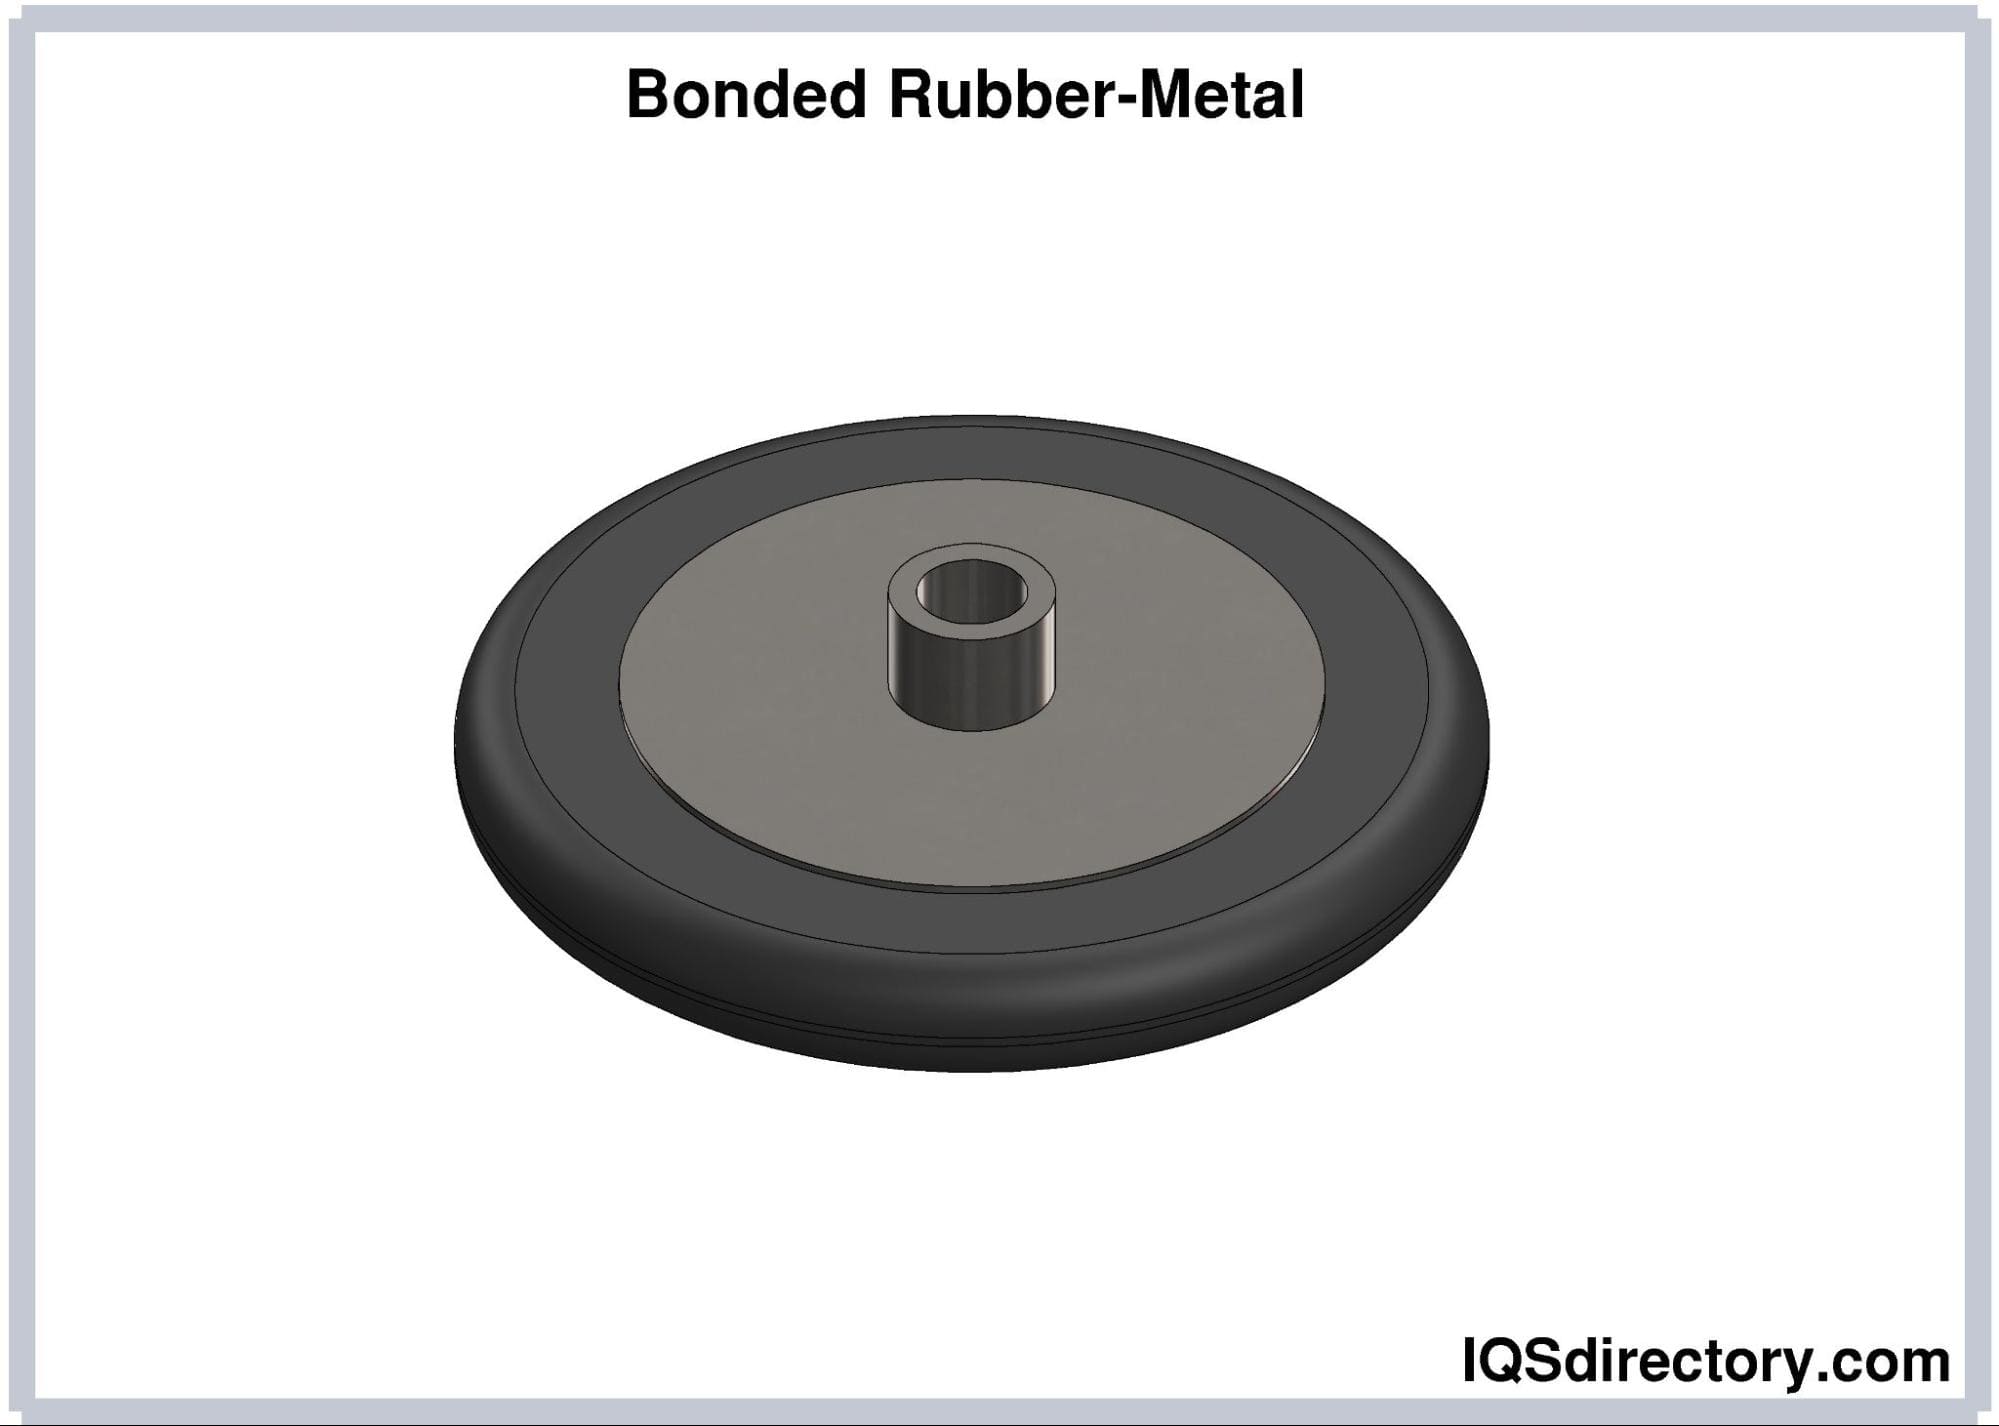 Bonded Rubber-Metal